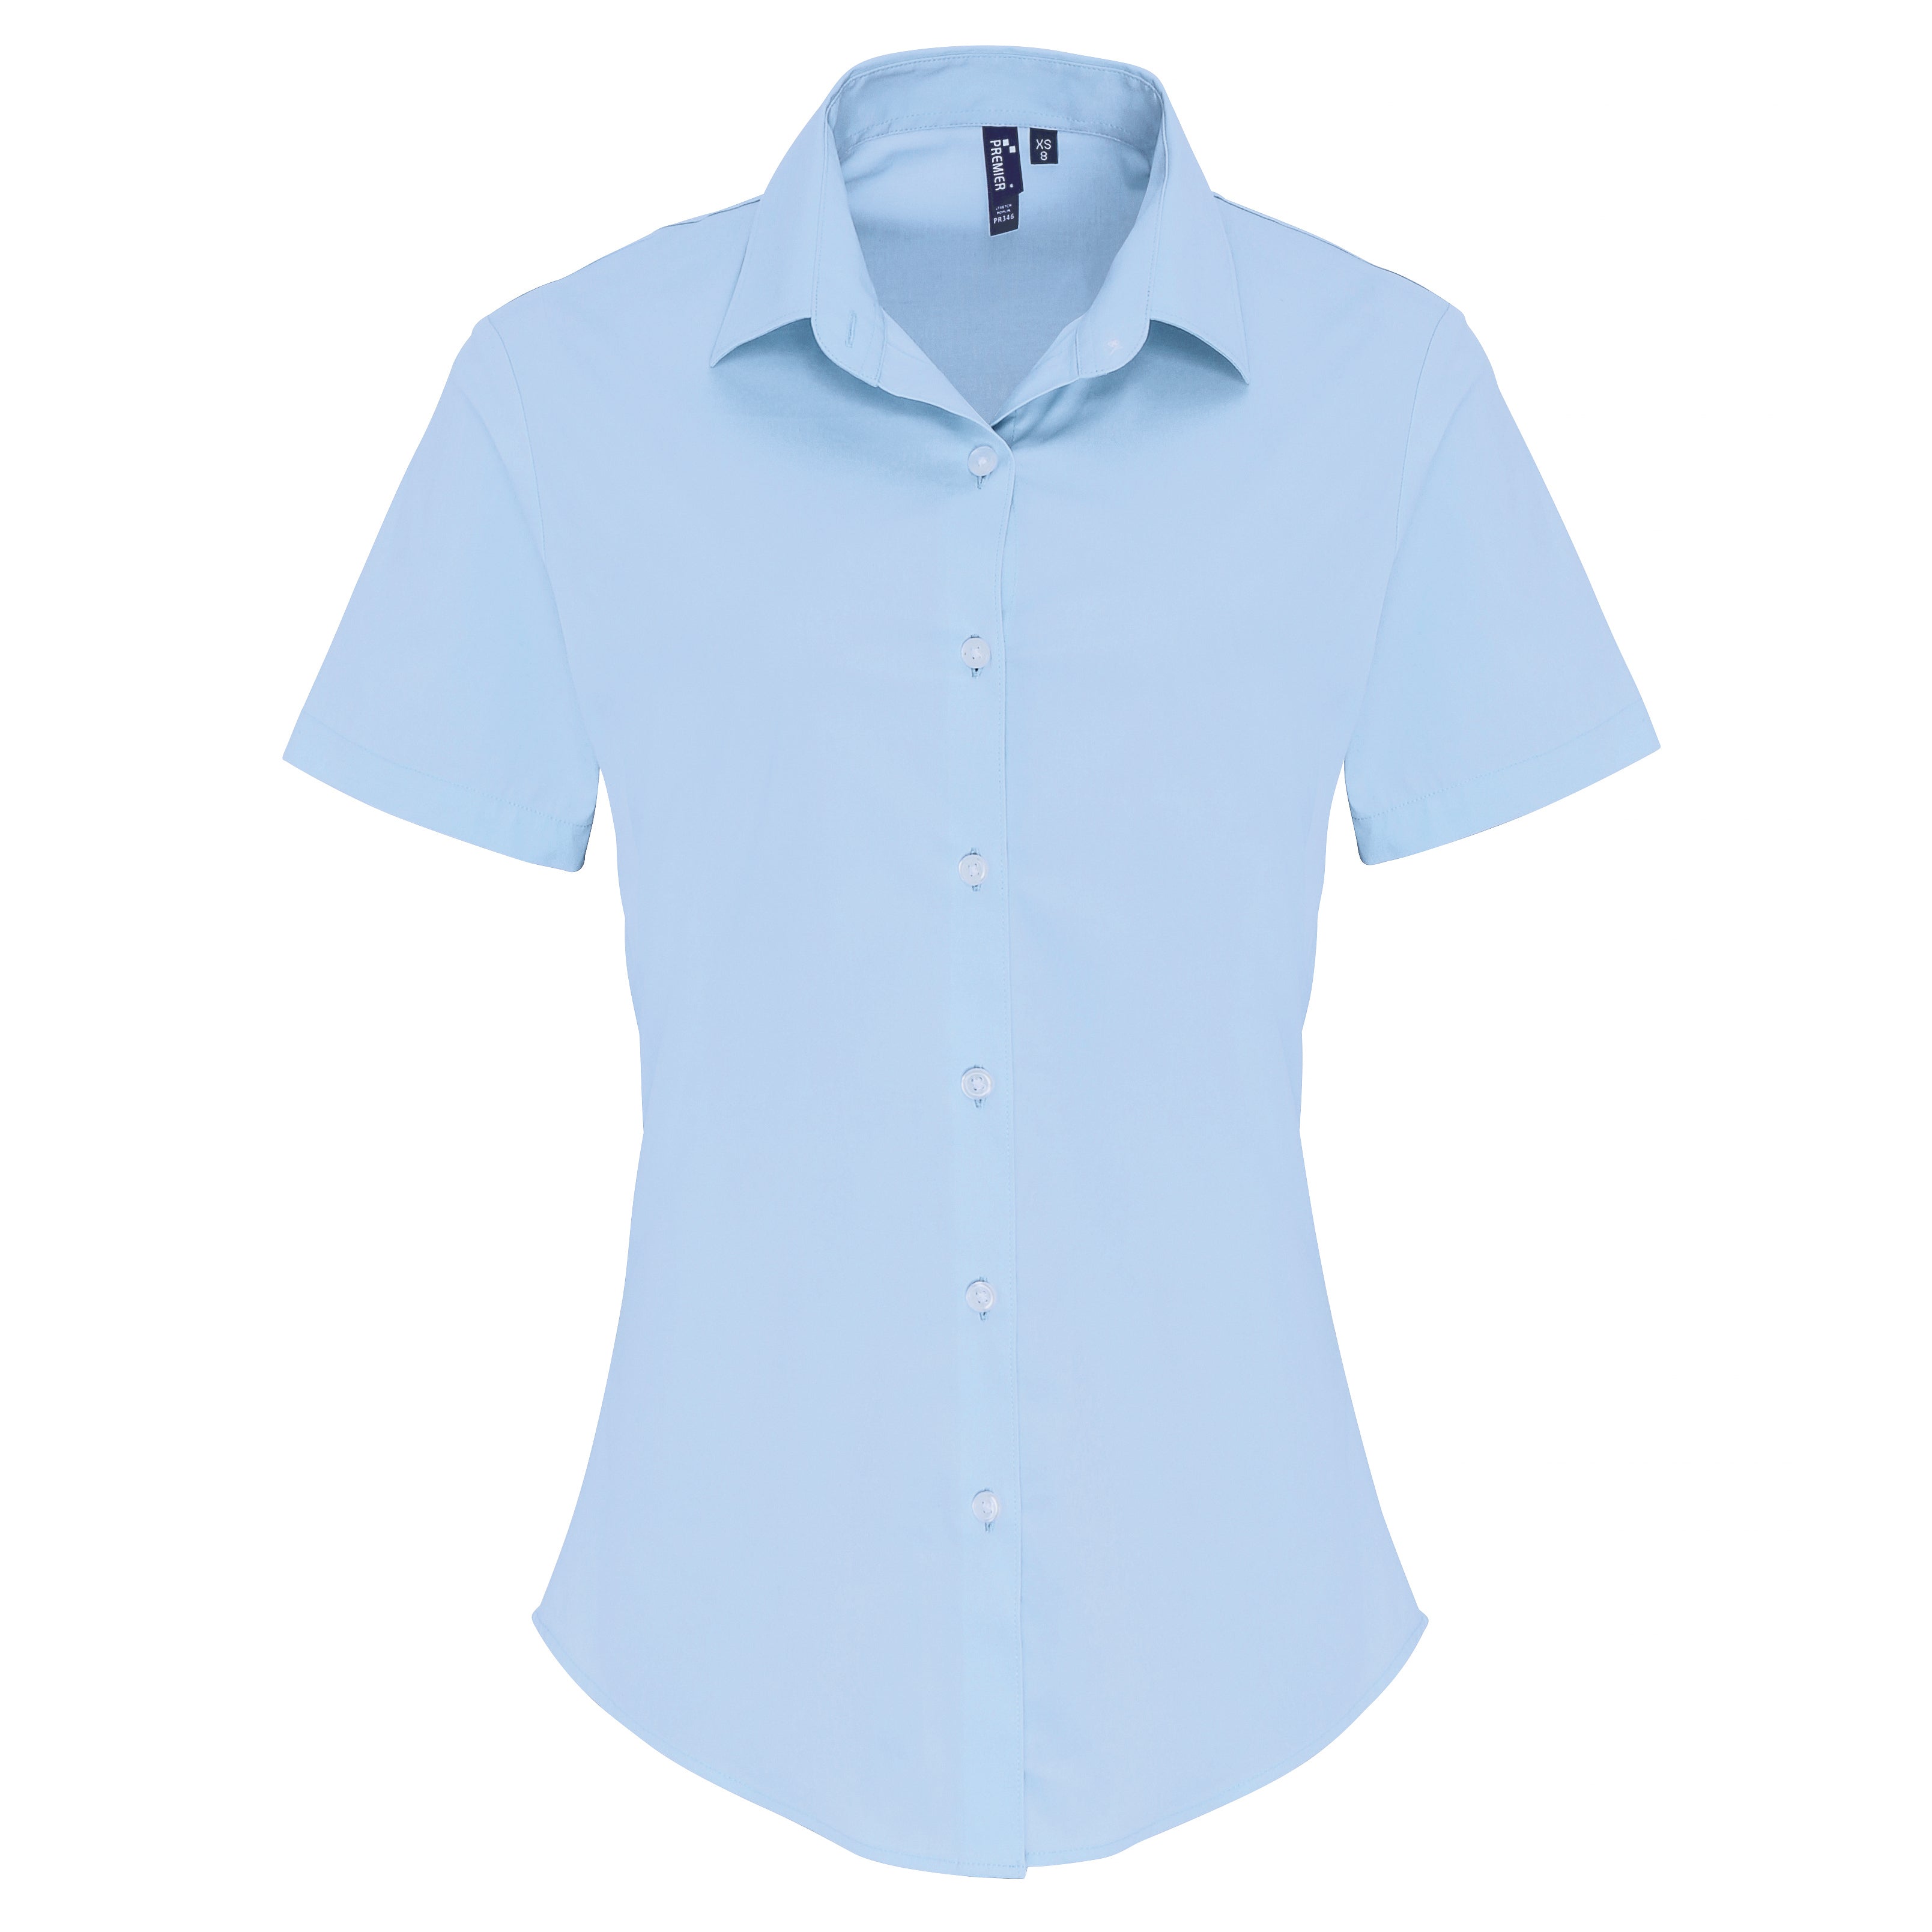 Women's stretch fit cotton poplin short sleeve blouse - Premier Collection